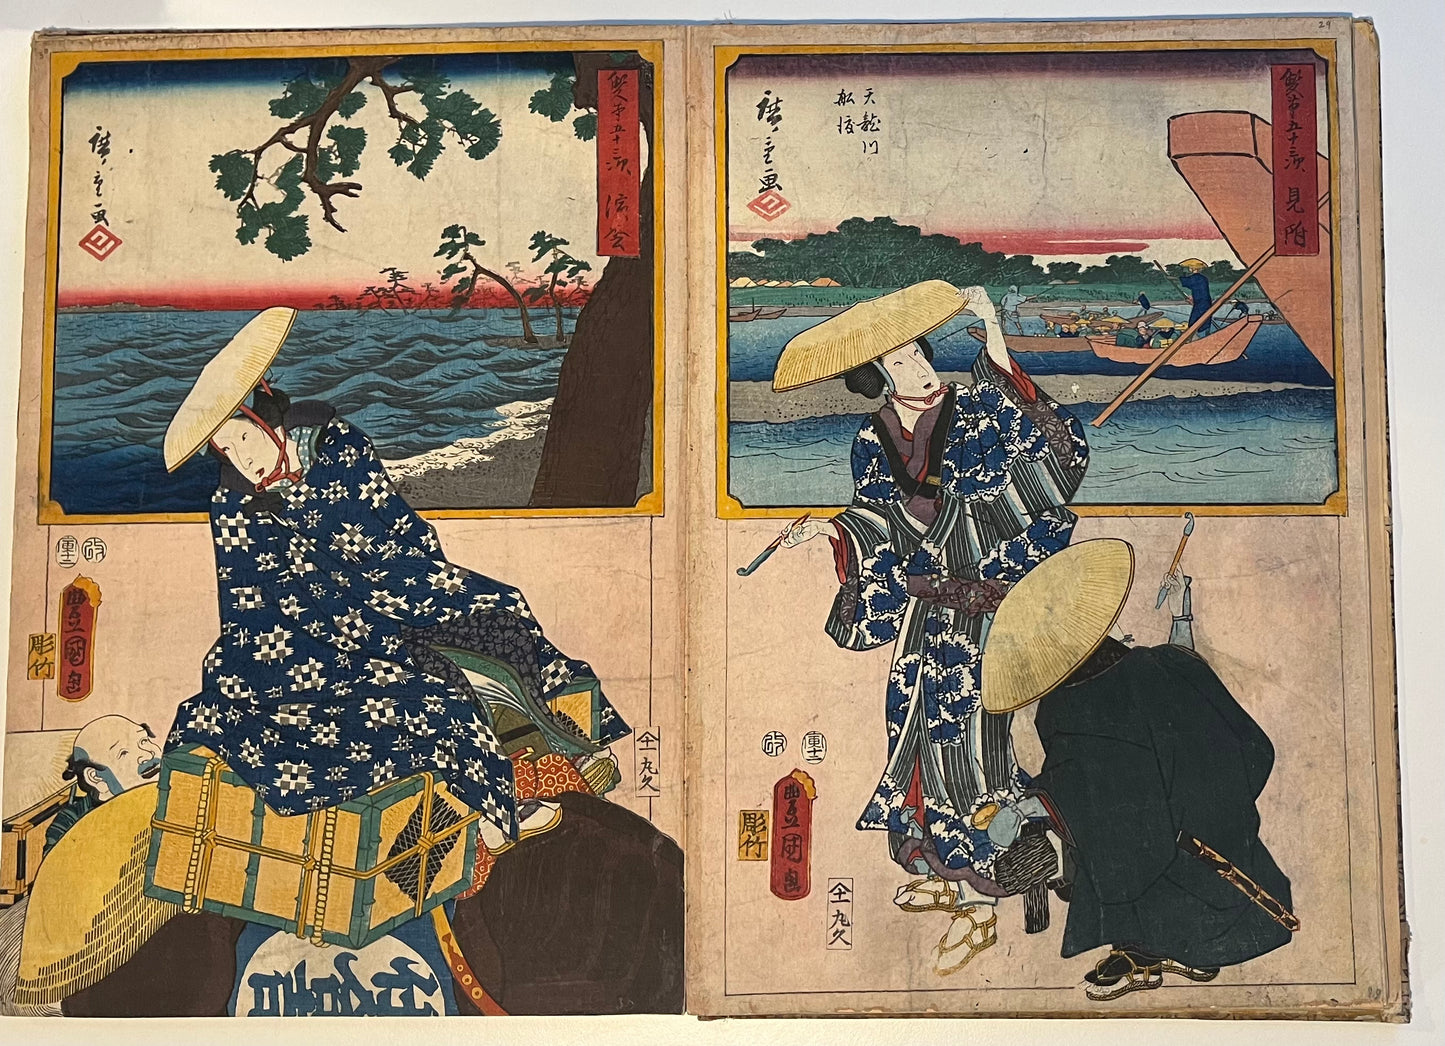 Hiroshige & Kunisada - Complete album of 55 prints - "Two Brushes" 53 stations of the Tokaido road - 1854-7 publisher Maruya Kyūshirõ